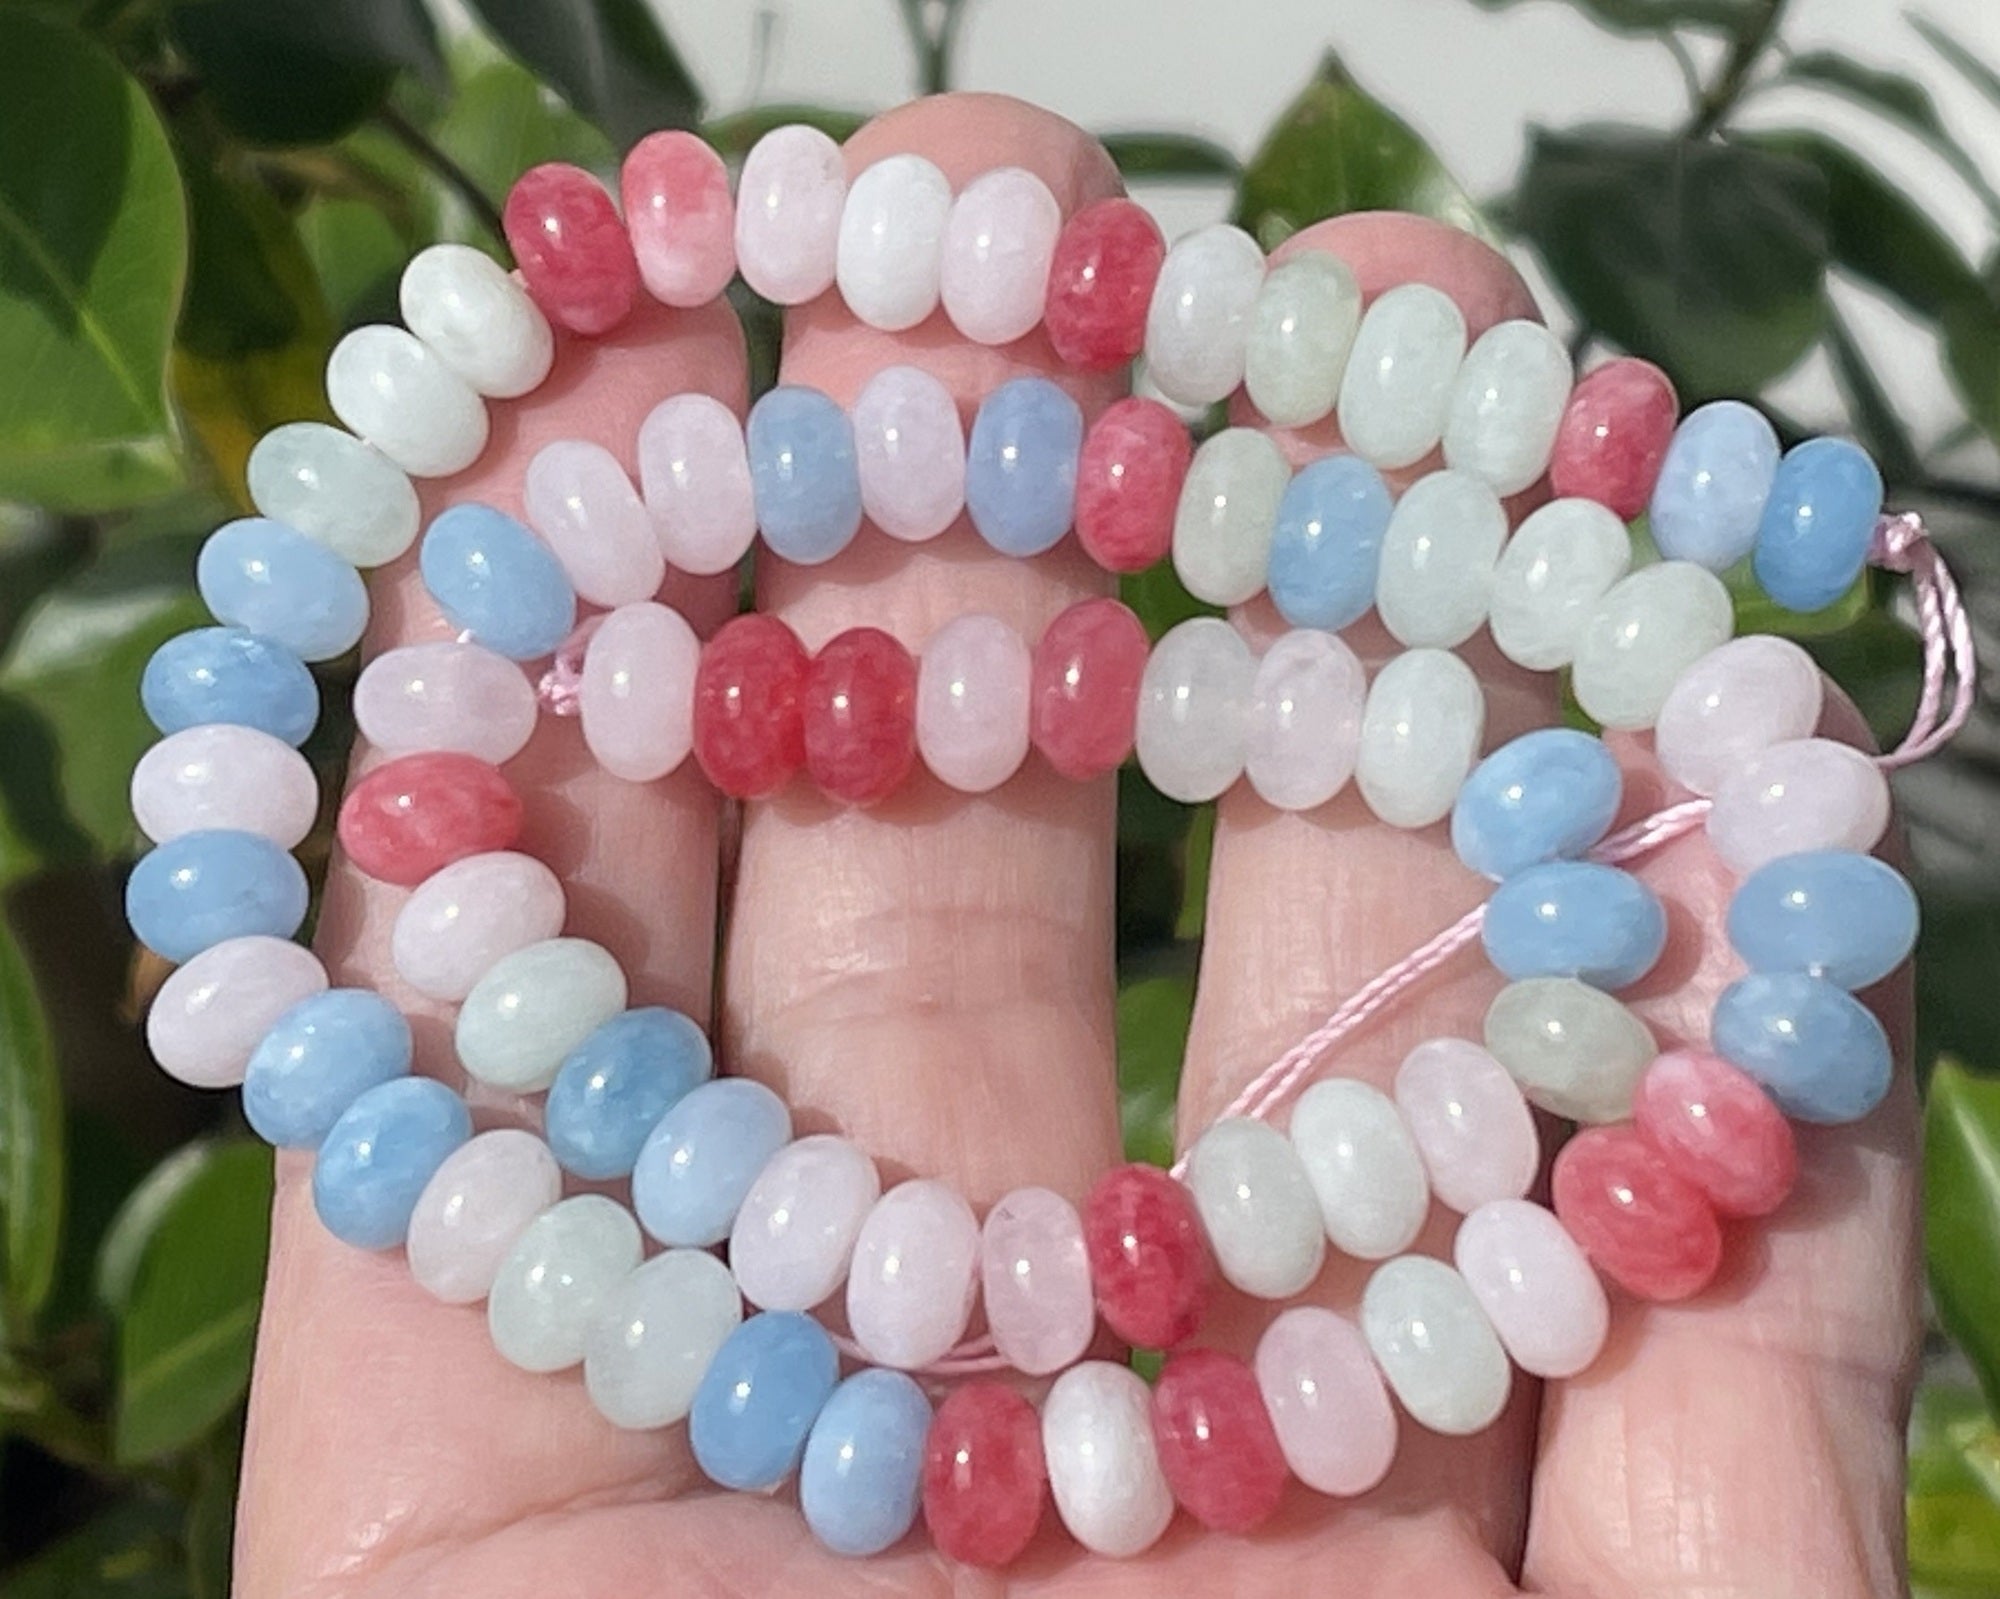 Multicolor Jade 8x5mm rondelle gemstone beads 15" strand